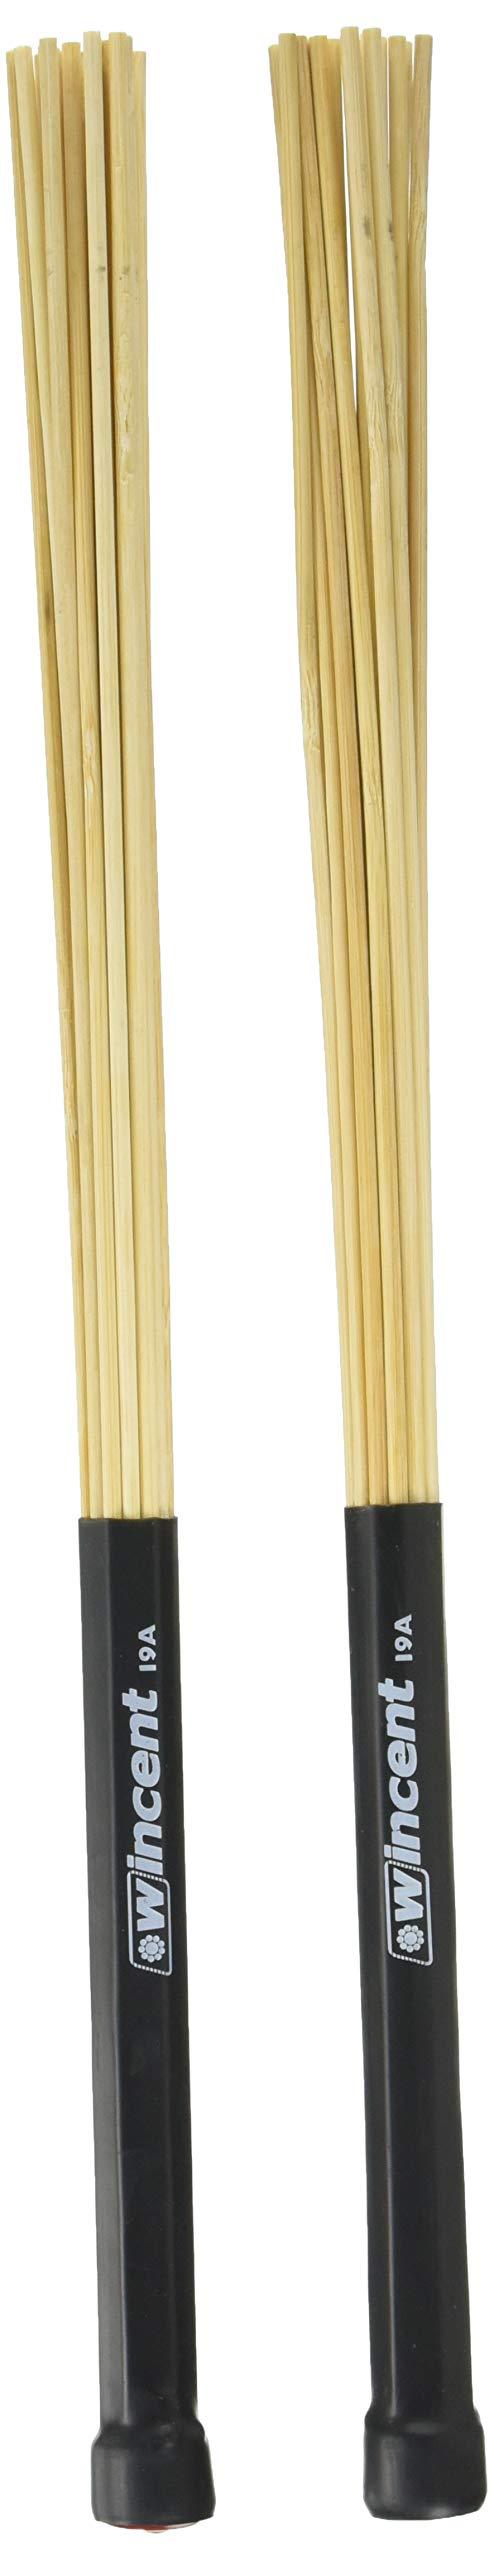 Wincent - W-19A BundleRods, 19-Dowel Bamboo (pair) Bamboo Series